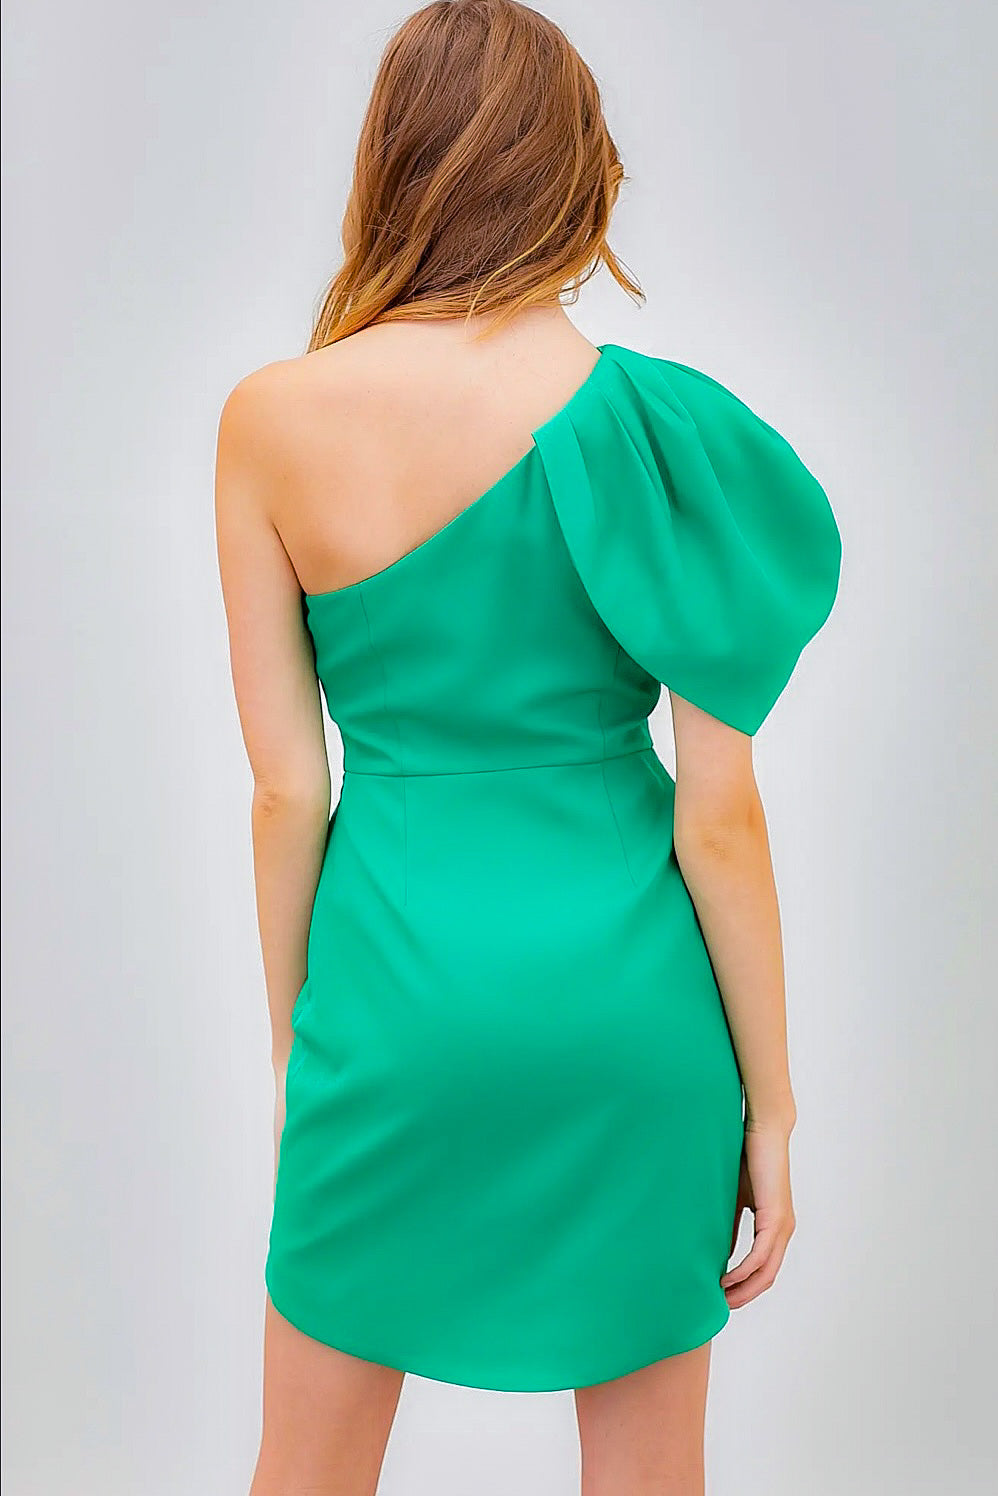 Eden Paris Green One Shoulder Puff Sleeve Dress - One shoulder dress - essecoco